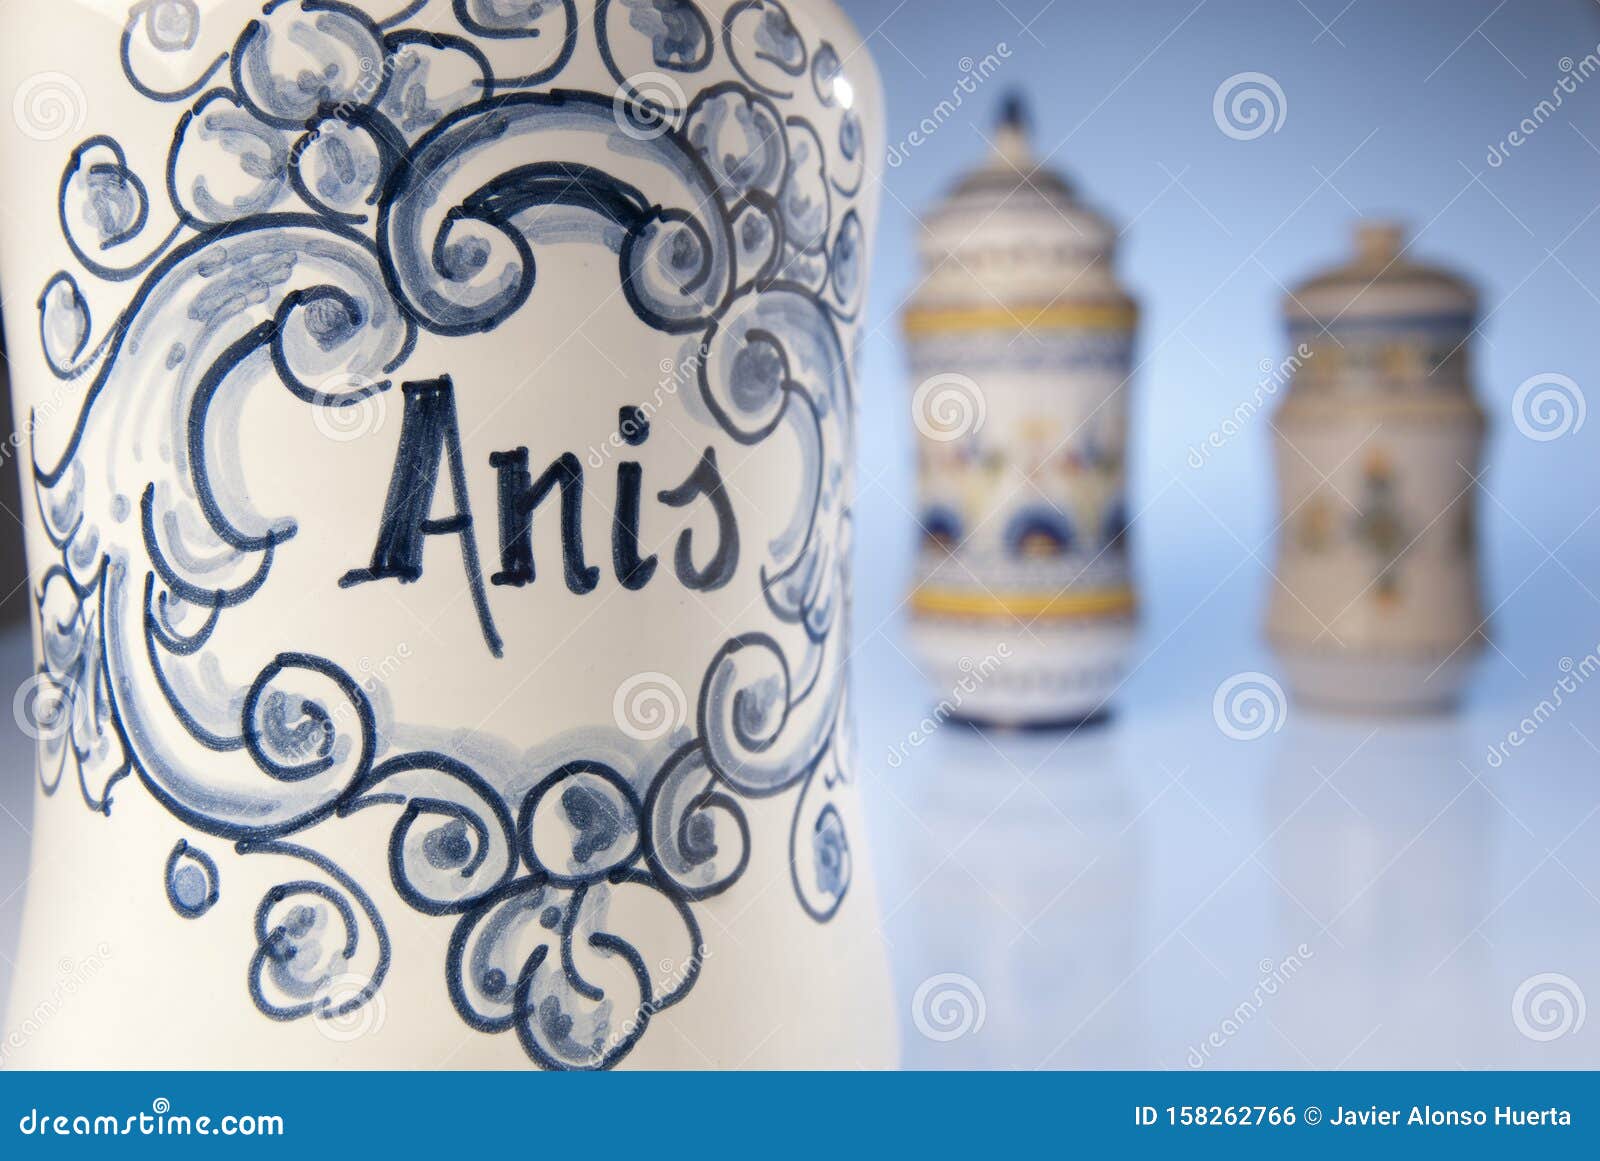 antique pharmacy jars of artisanal ceramics, medicinal herbs